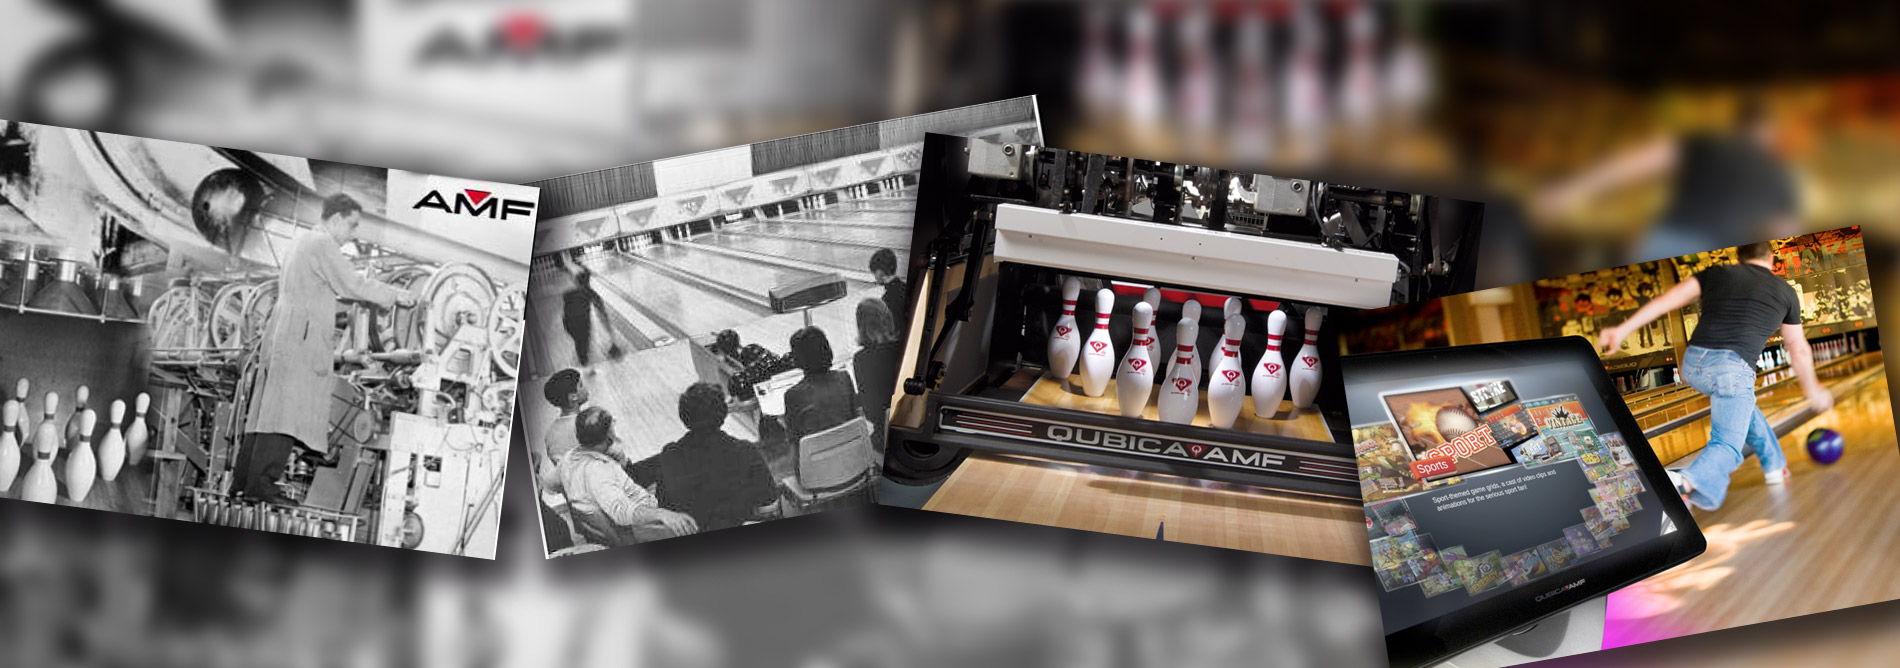 qubicaamf-company-bowling-History.jpg